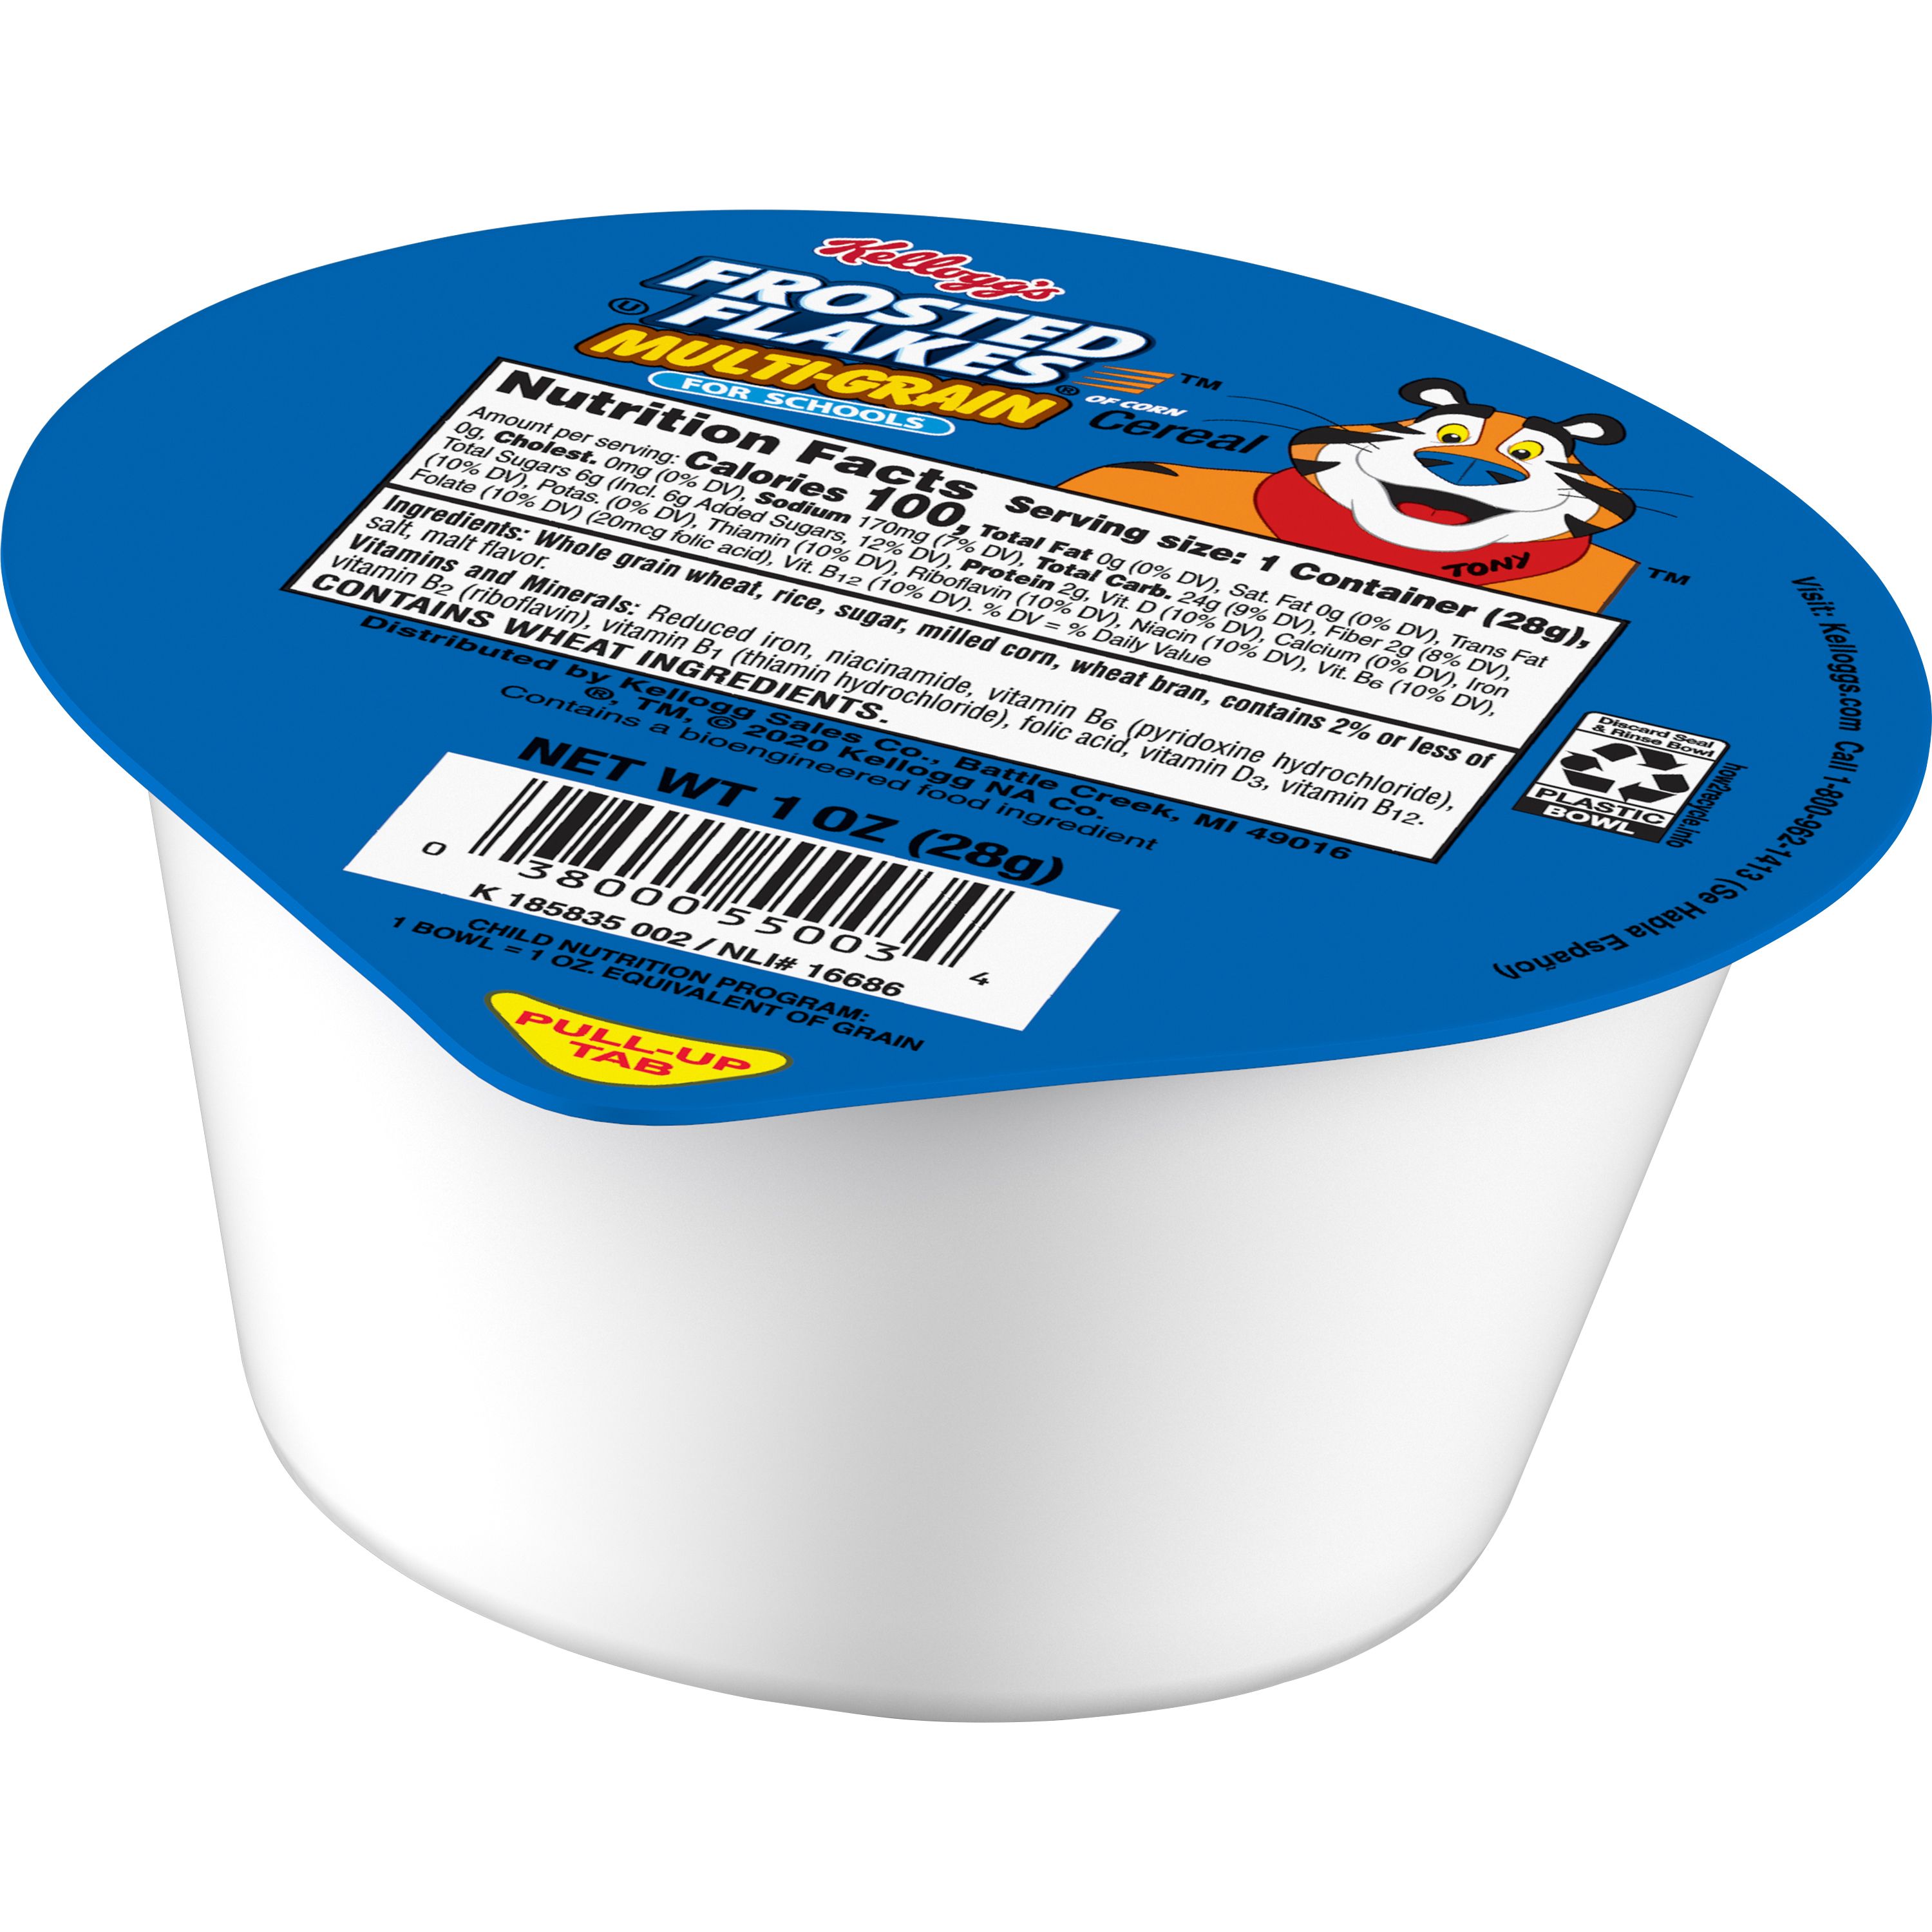 Frosted Corn Flakes™ Cereal Single Serve Bowlpak 1 oz